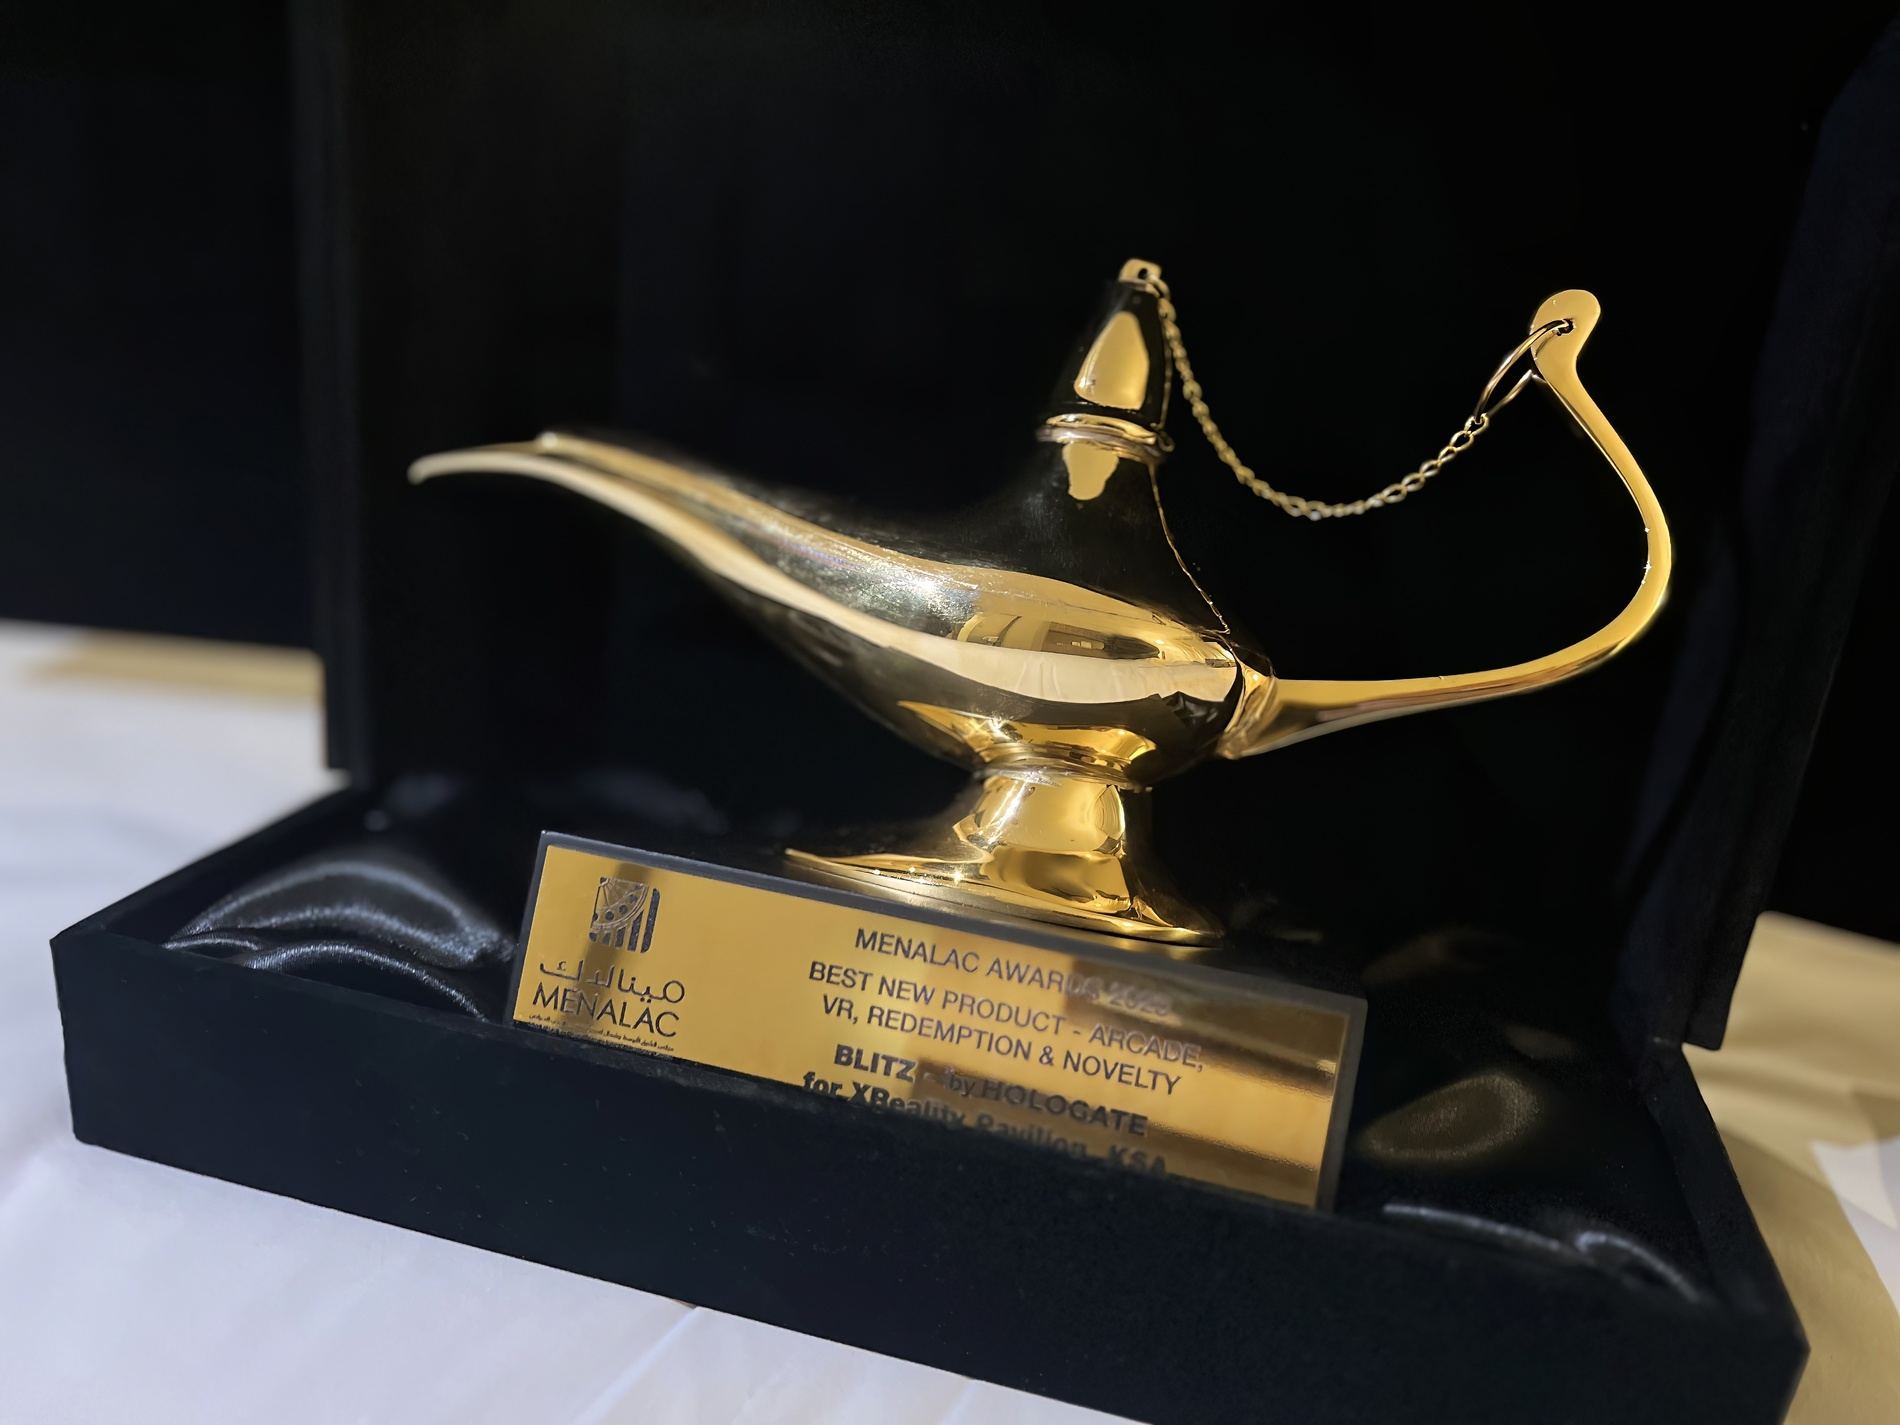 HOLOGATE BLITZ wins Menalac Award!